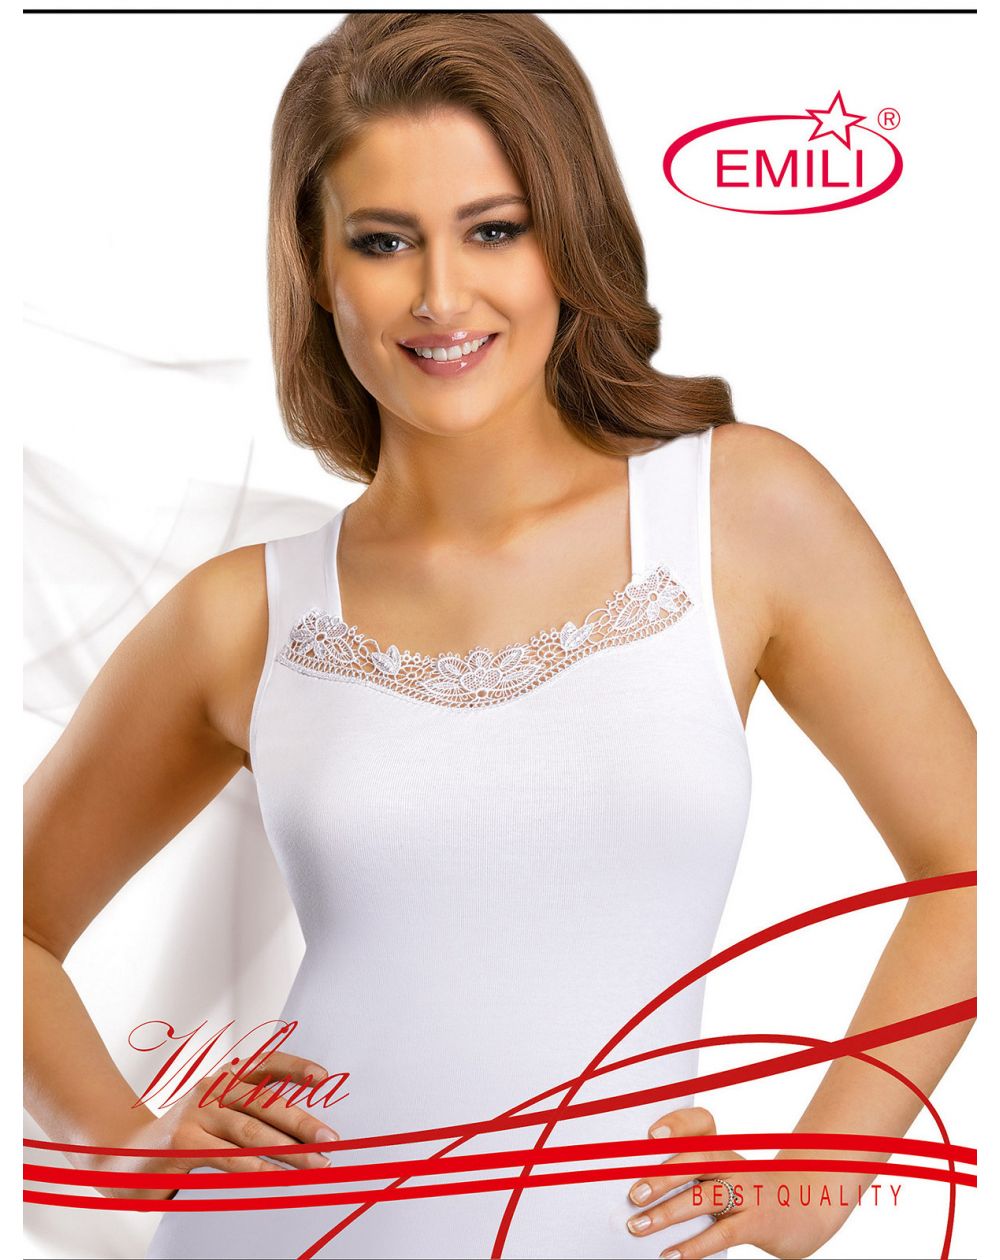 Emila Wilma T-shirt S-XL